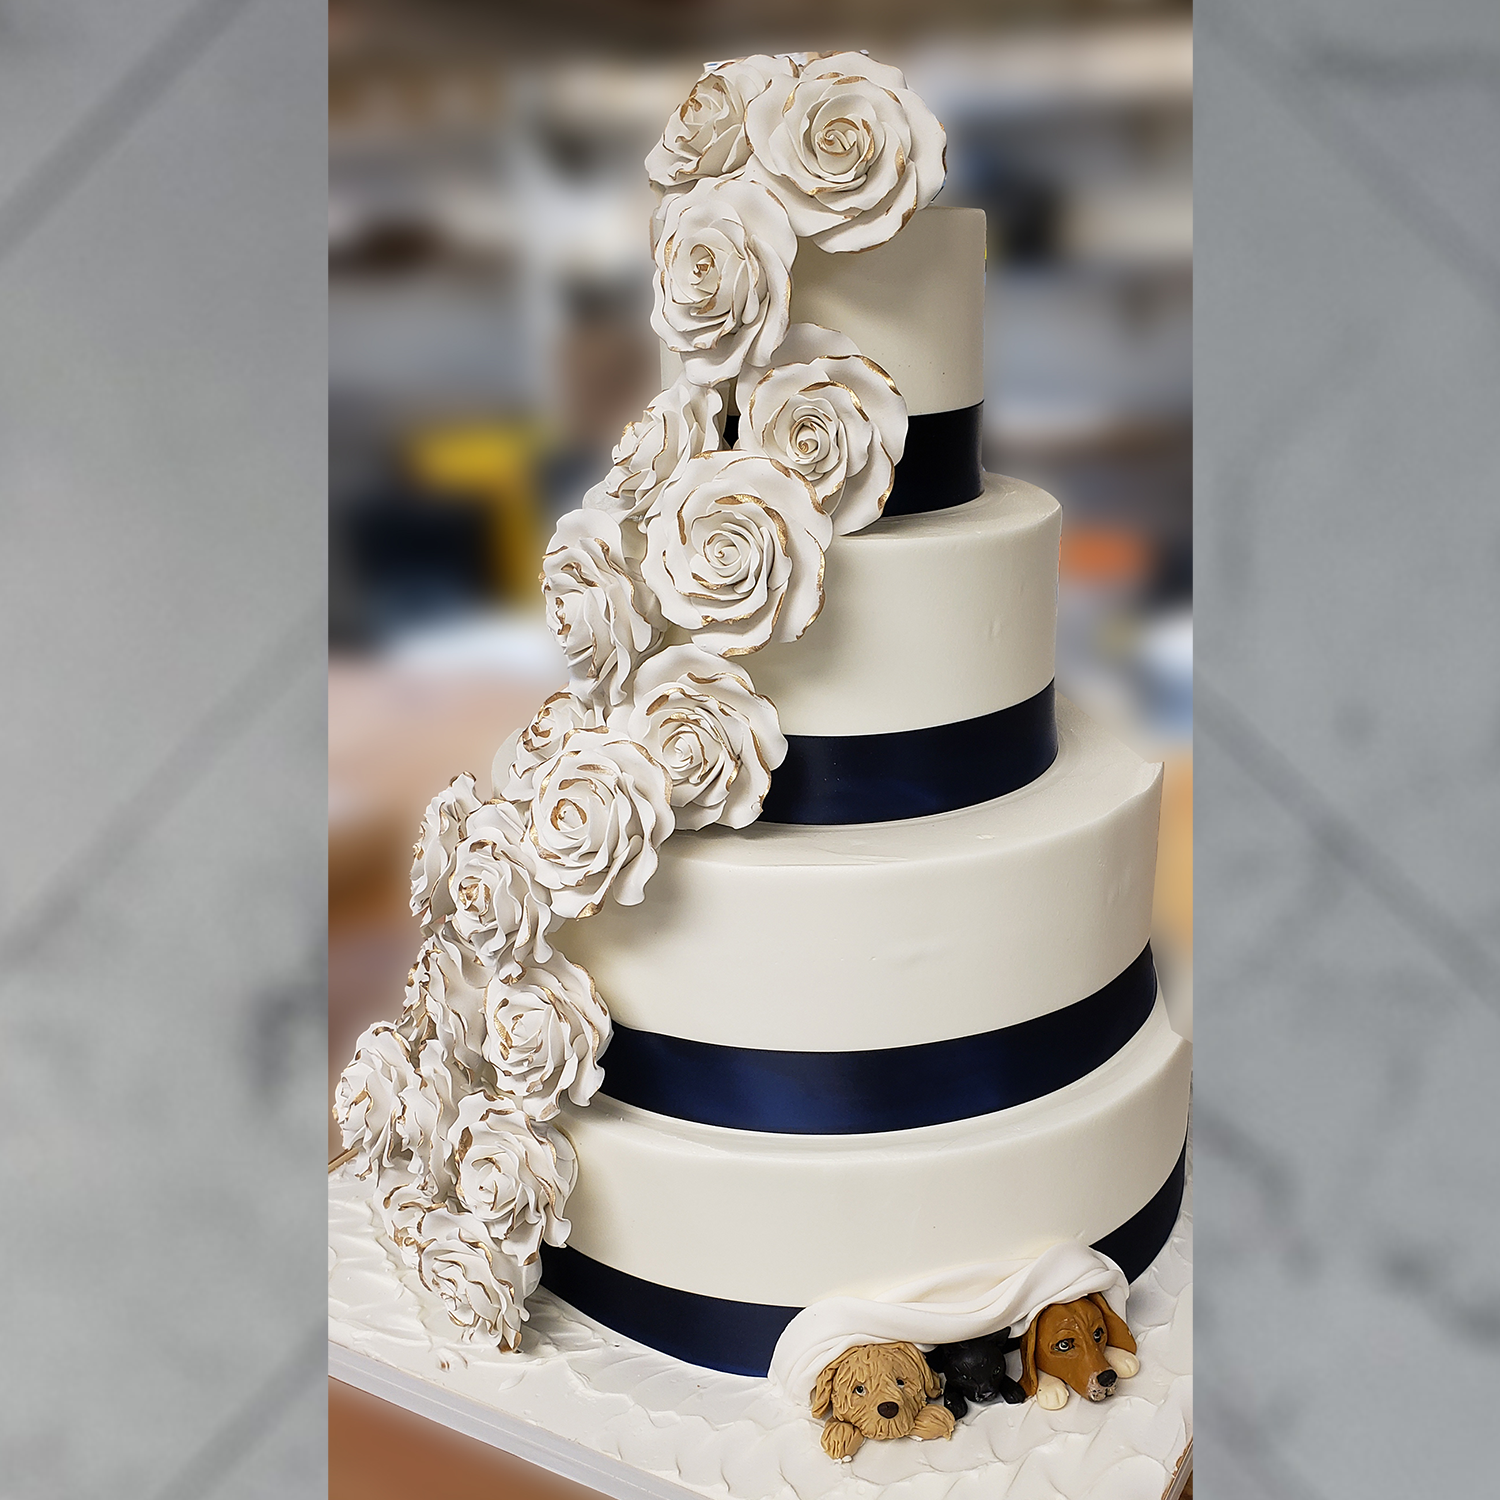 Puppies & Roses Wedding Cake